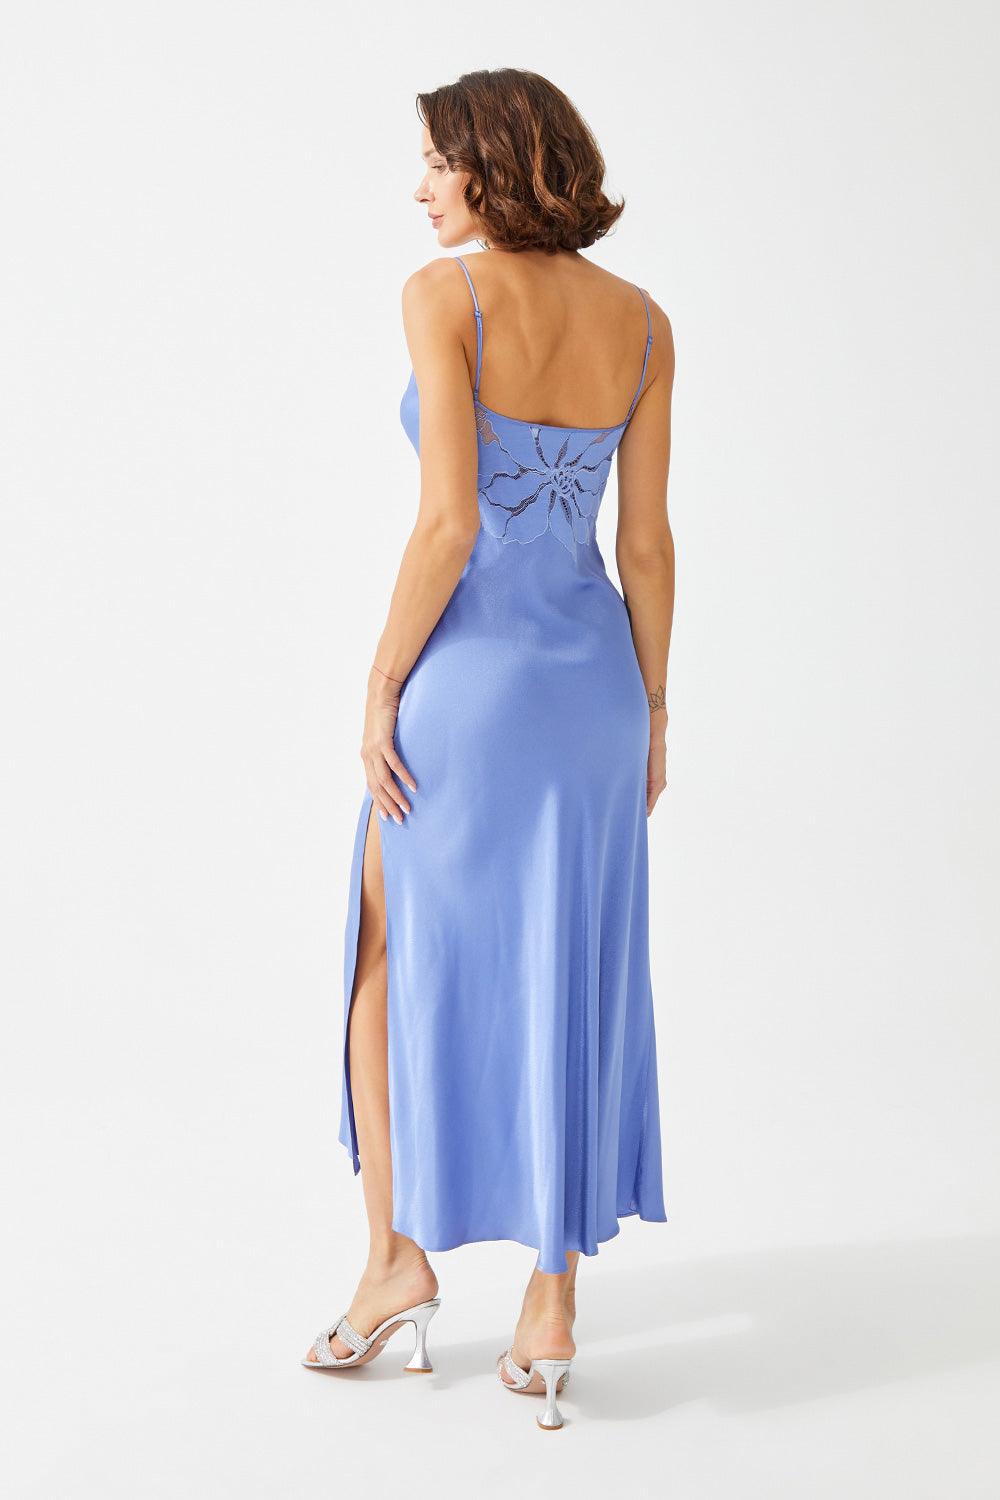 Roxa Long Rayon Trimmed Slip Dress - Lilac - Bocan